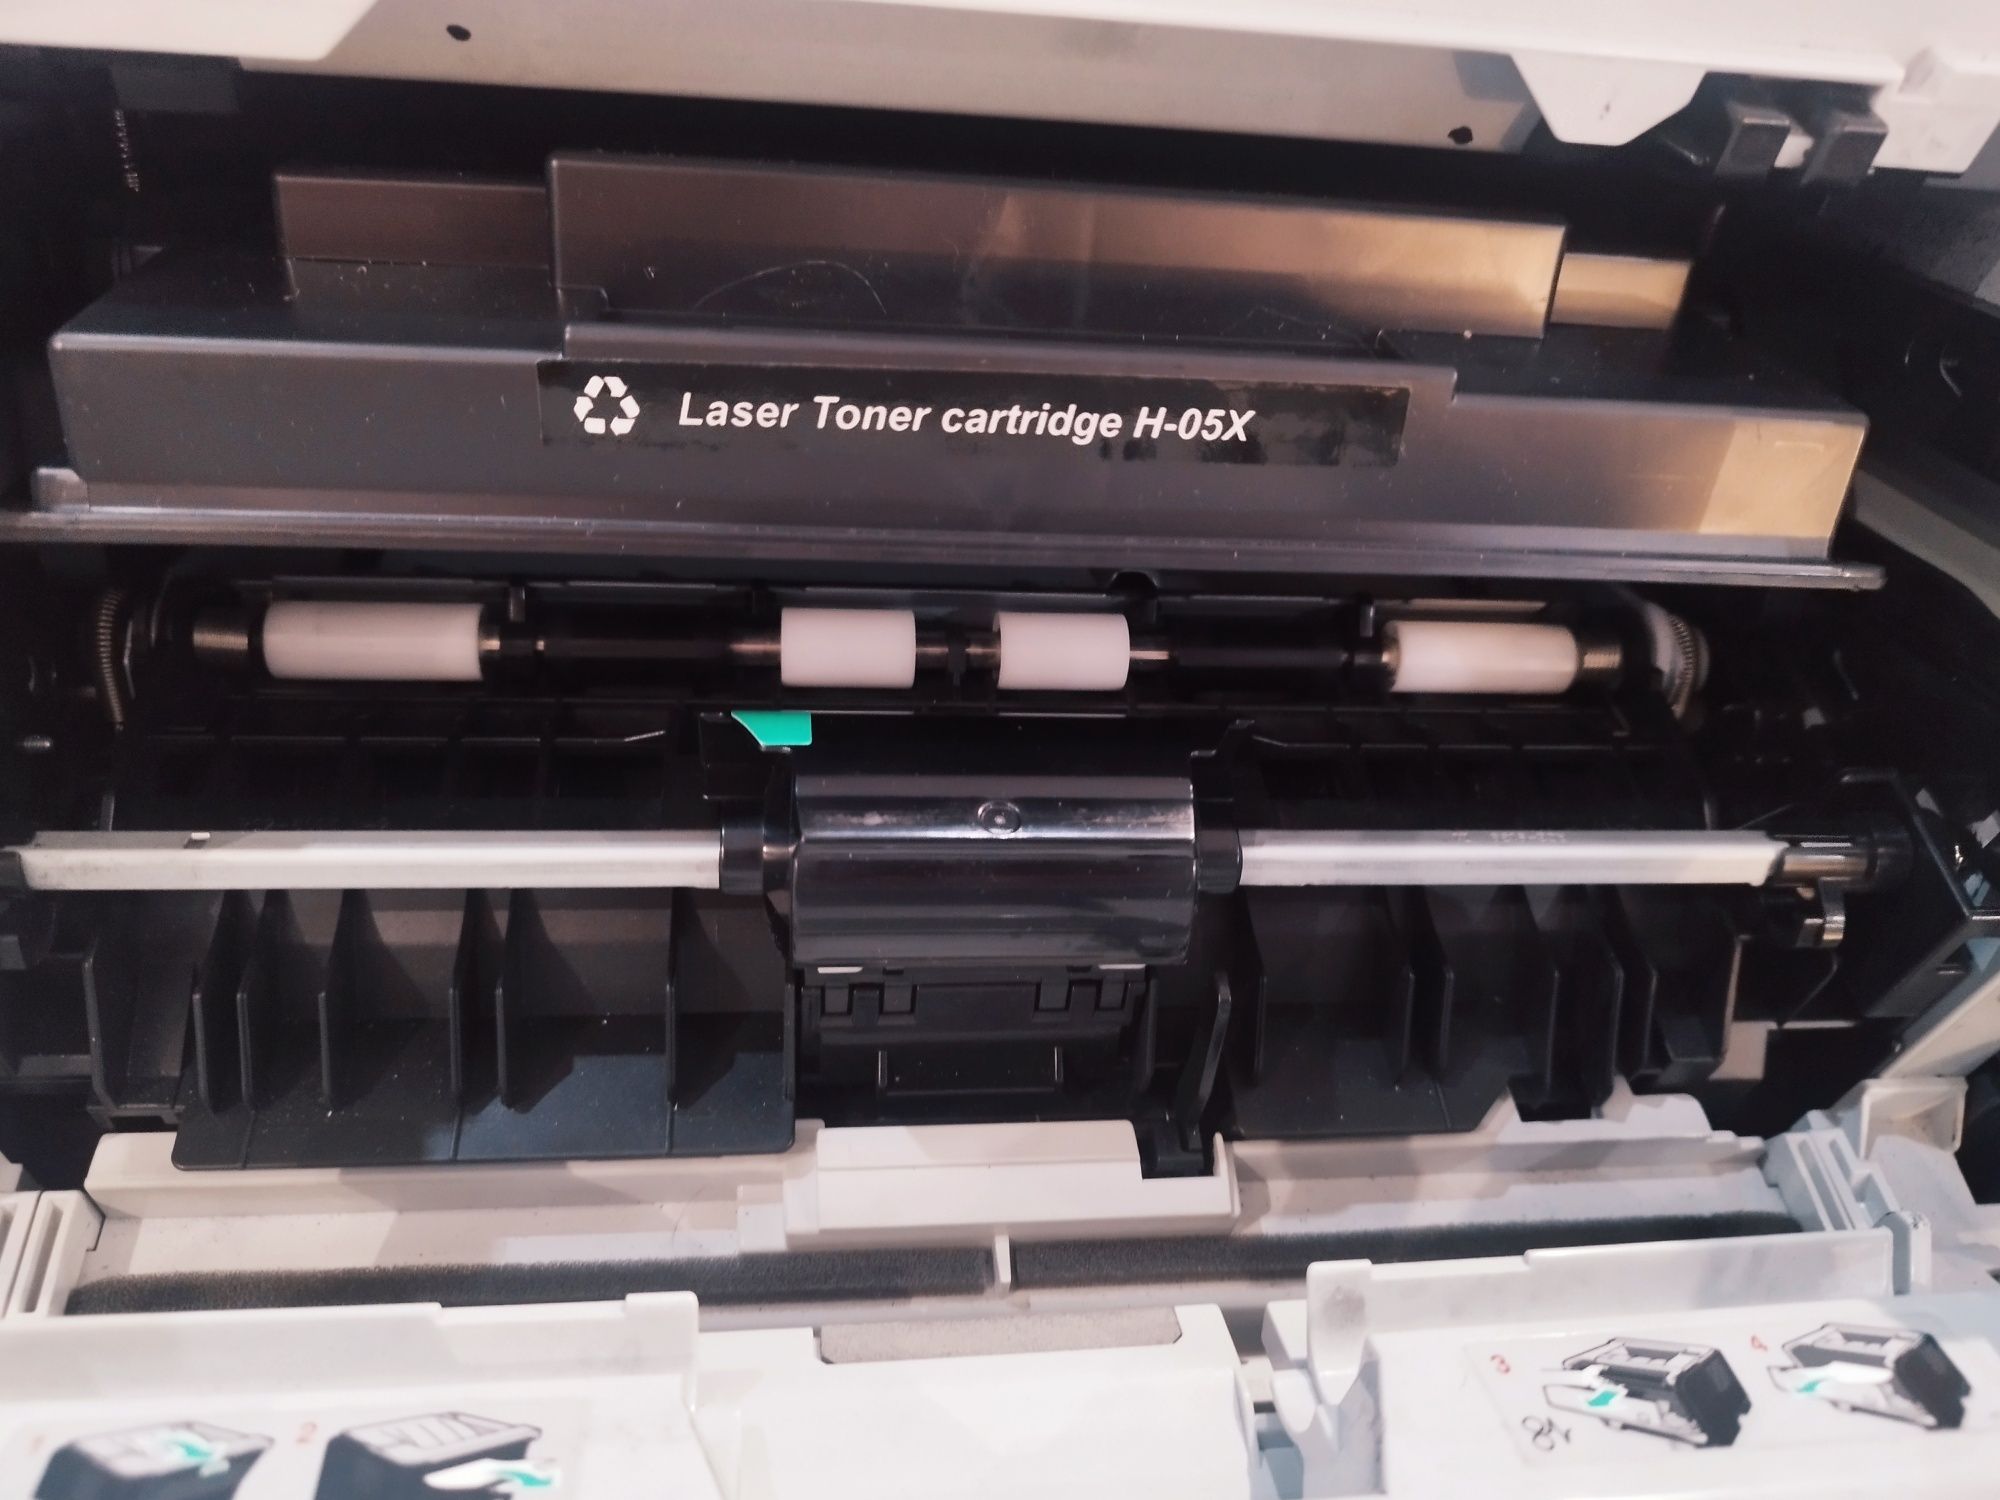 Drukarka laserowa HP-P255DN, sprawna. Nowy toner! Okazja.